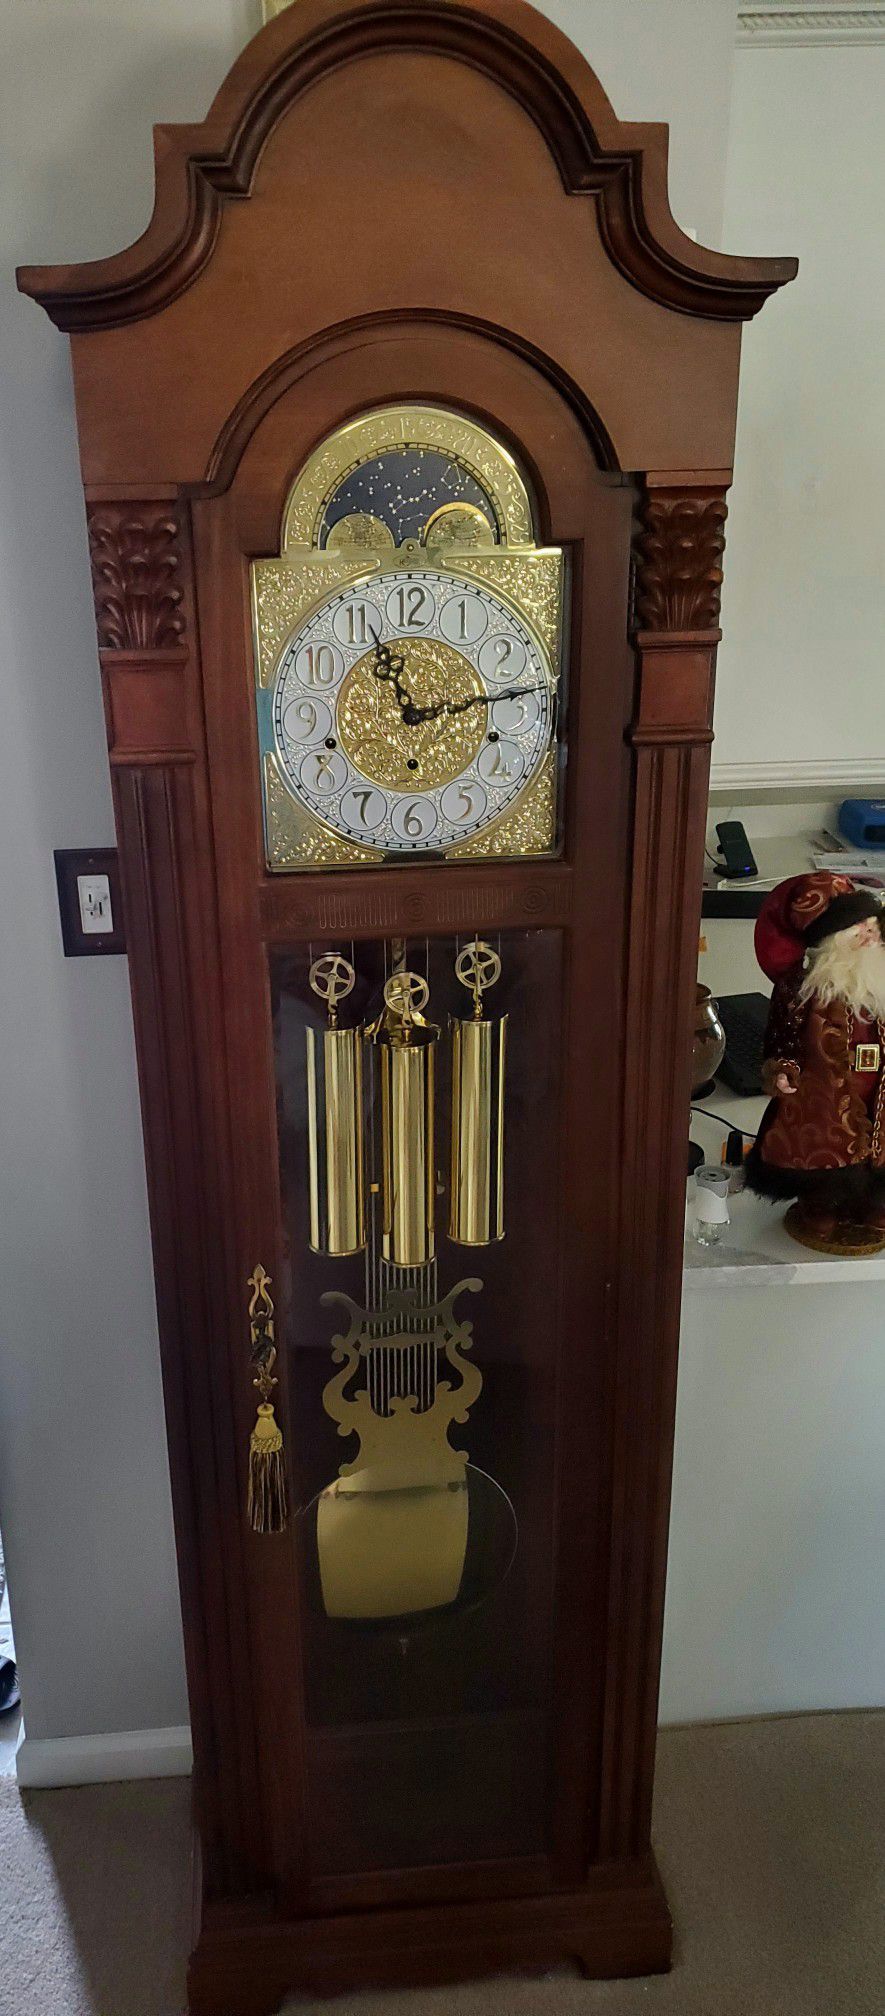 Ridgeway Grandfather Clock With Moon Phase